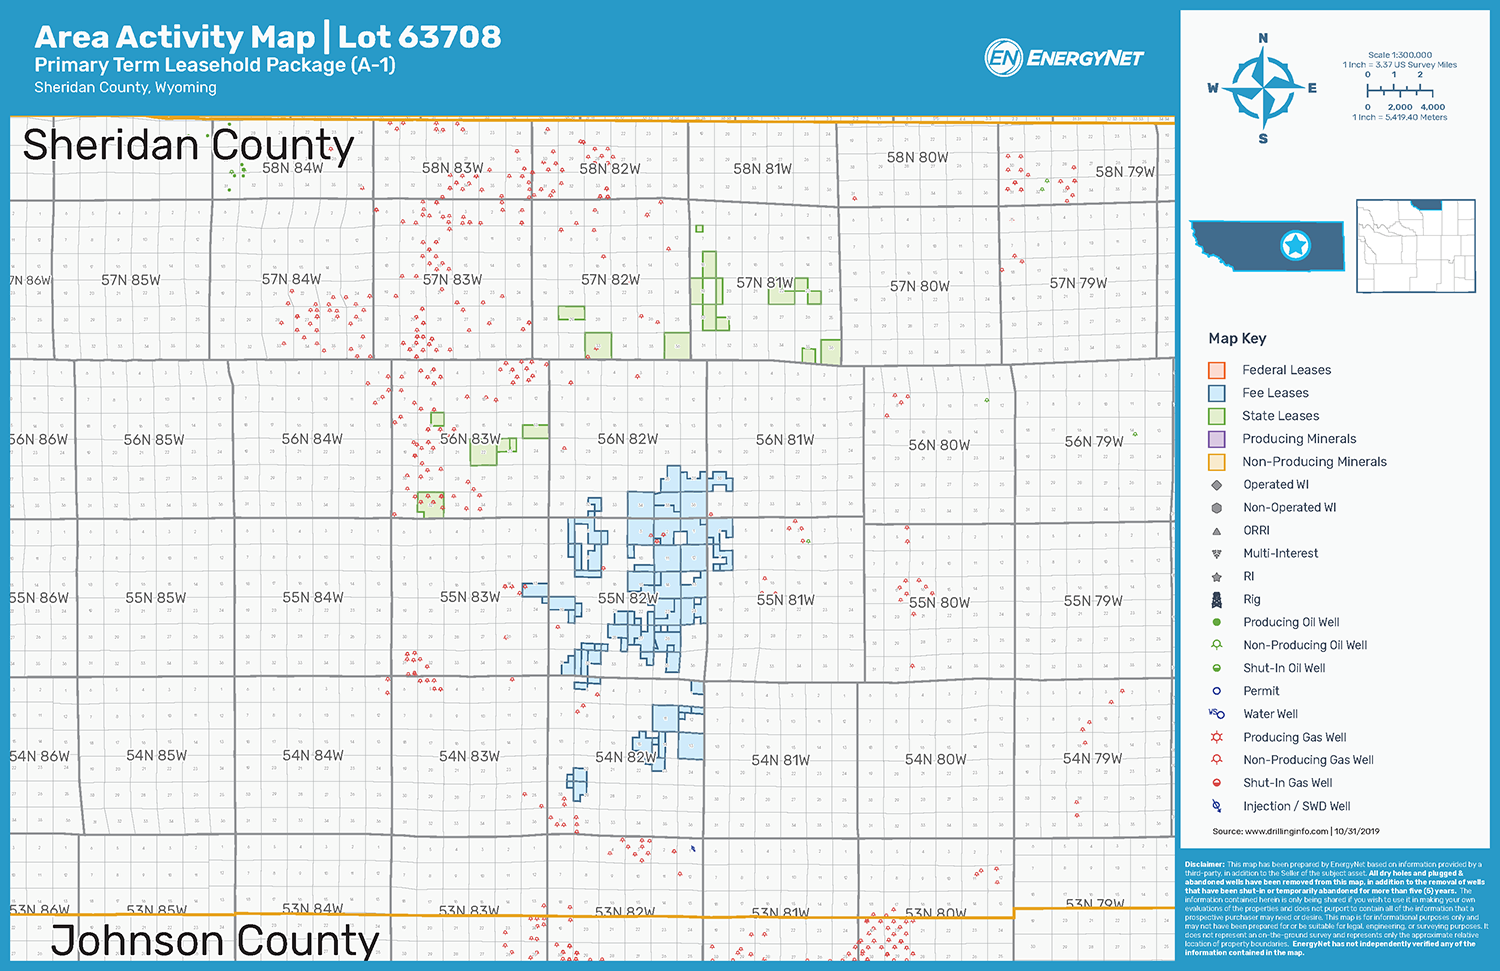 Lot 63708: Sheridan County, Wyoming Asset Map (Source: EnergyNet)